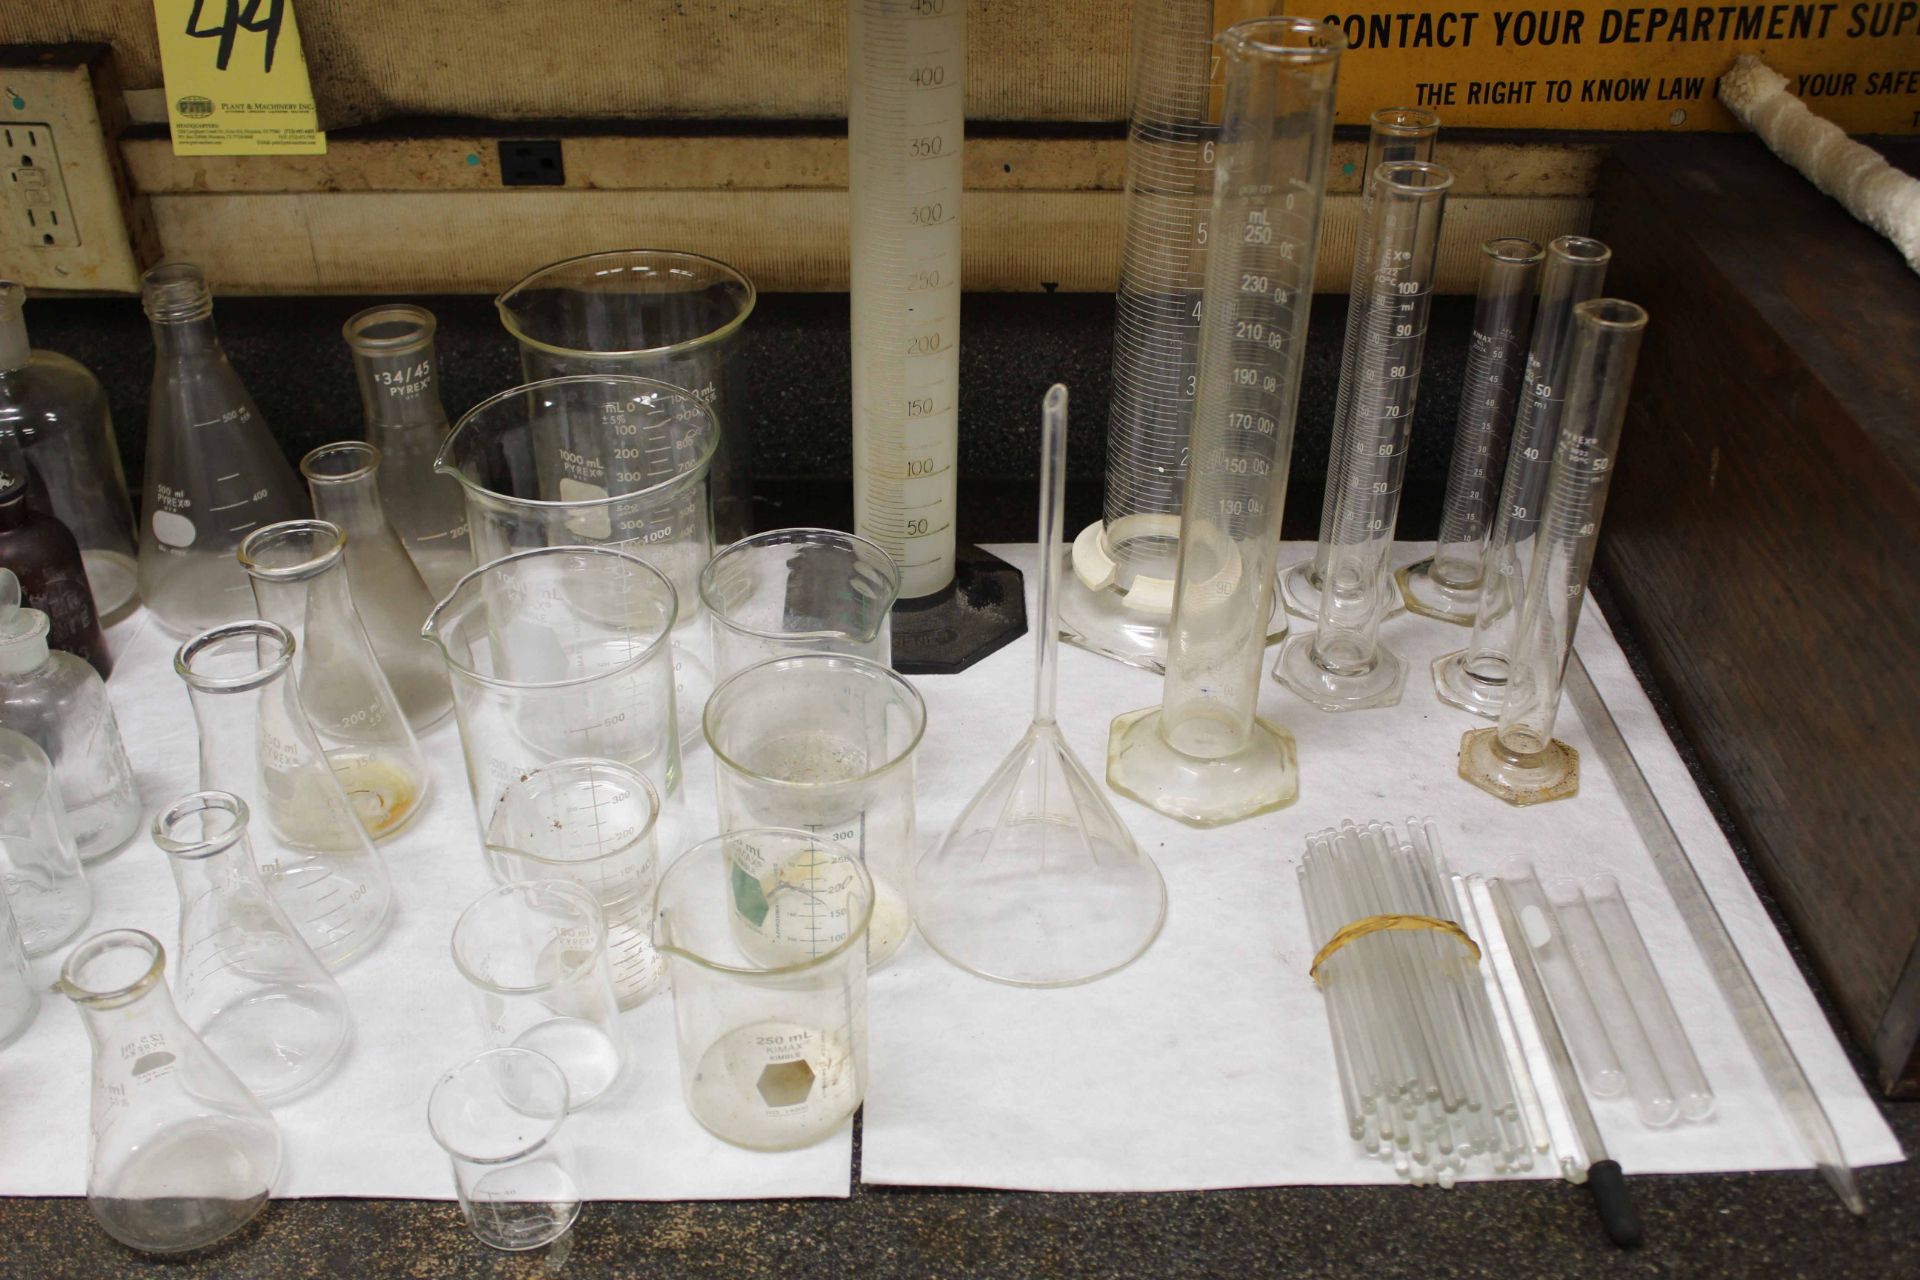 LOT OF LABORATORY GLASS WARE: BOD bottles, breakers, graduated cylinders, flasks, stir sticks, - Image 3 of 4